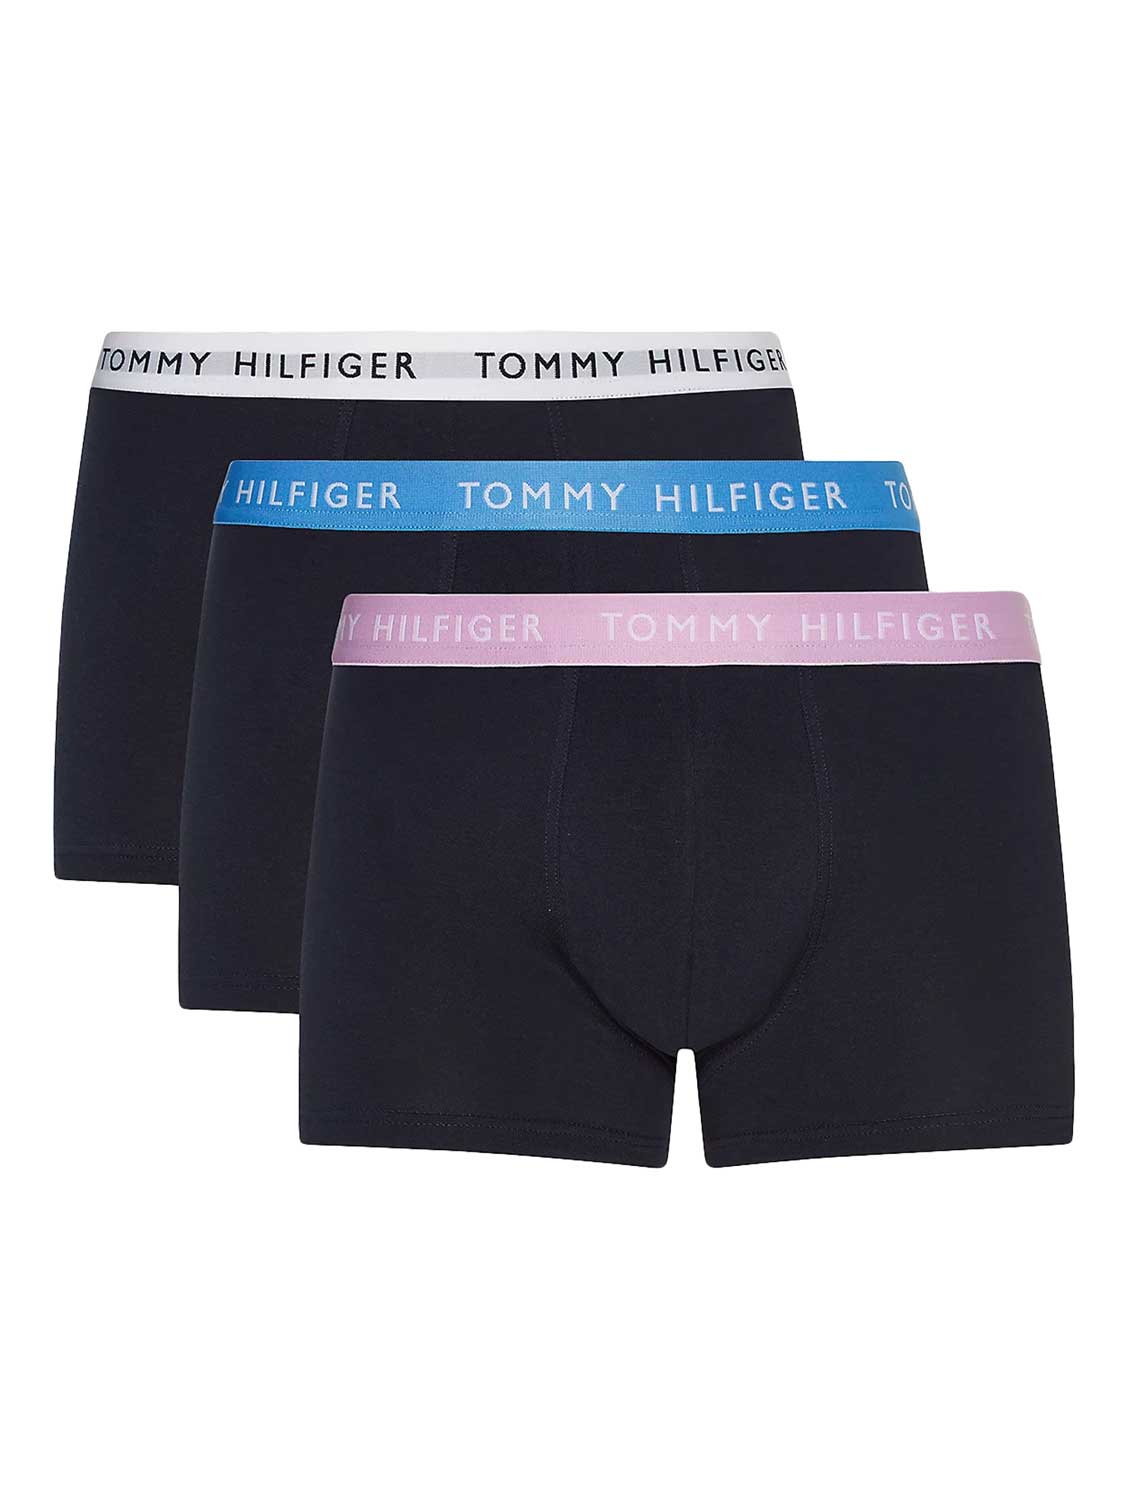 Tommy Hilfiger trunks (3-pack) - heren boxers normale lengte - blauw met gekleurde tailleband -  Maat: XXL